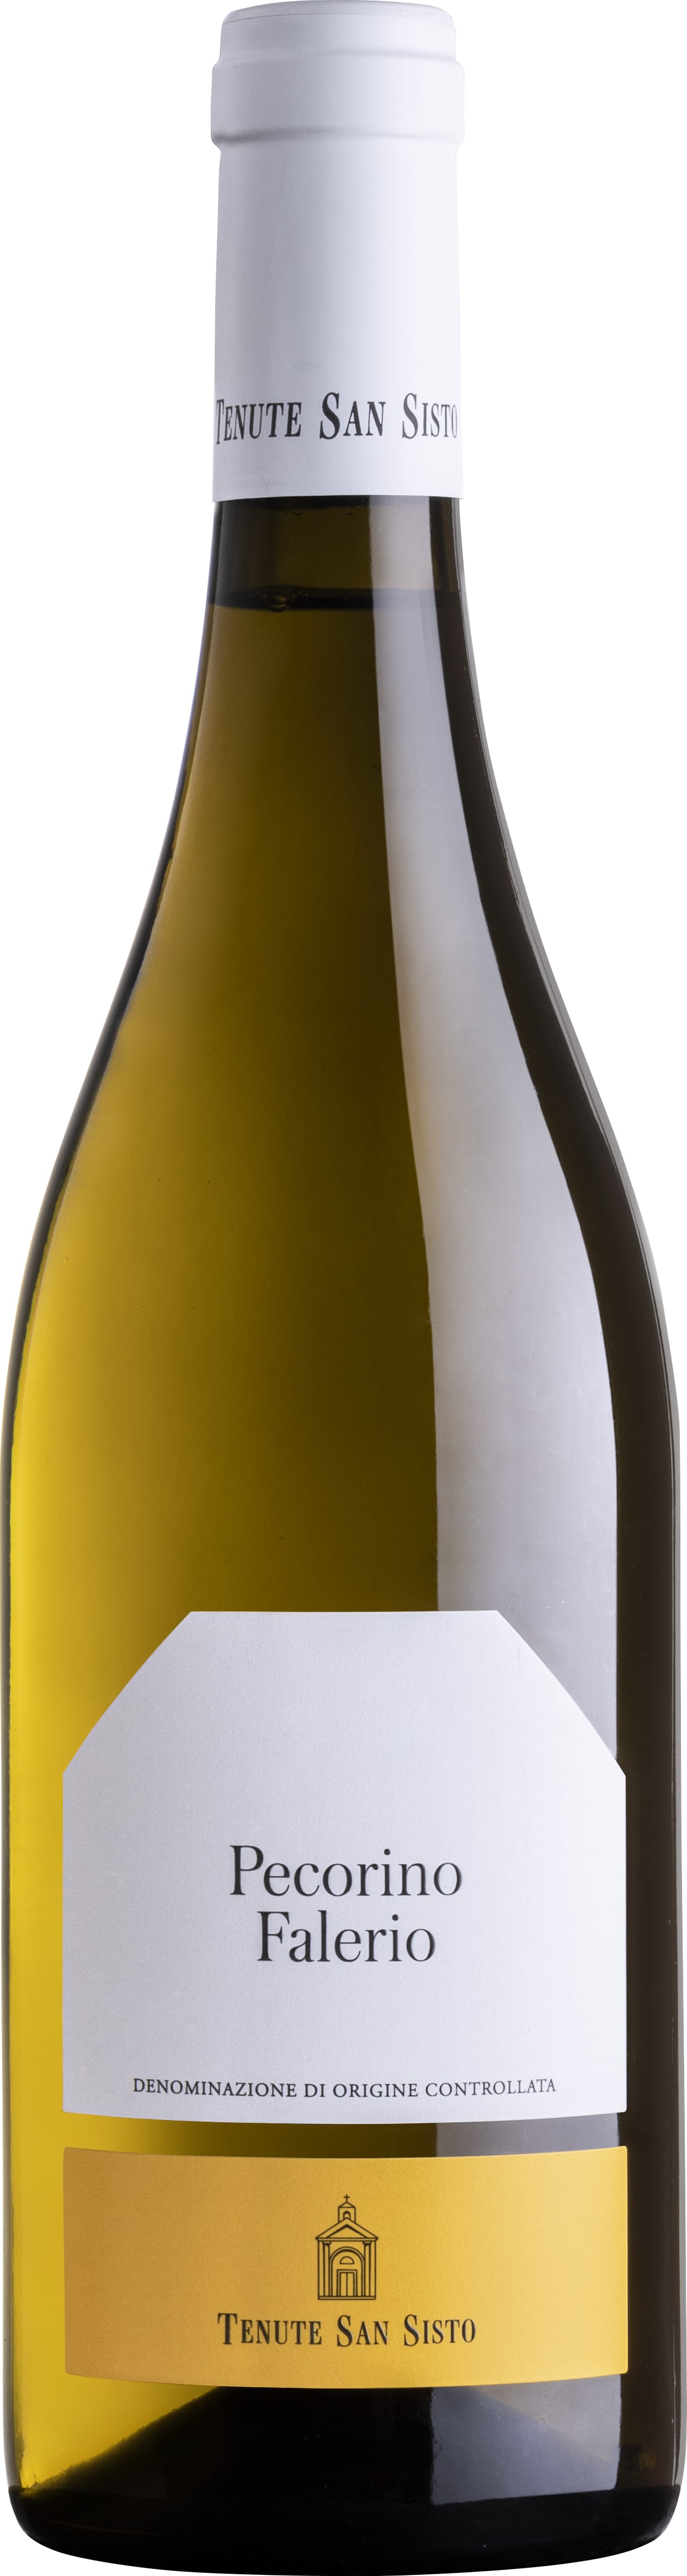 San Sisto Pecorino Falerio DOC 2022 75cl - Buy San Sisto Wines from GREAT WINES DIRECT wine shop